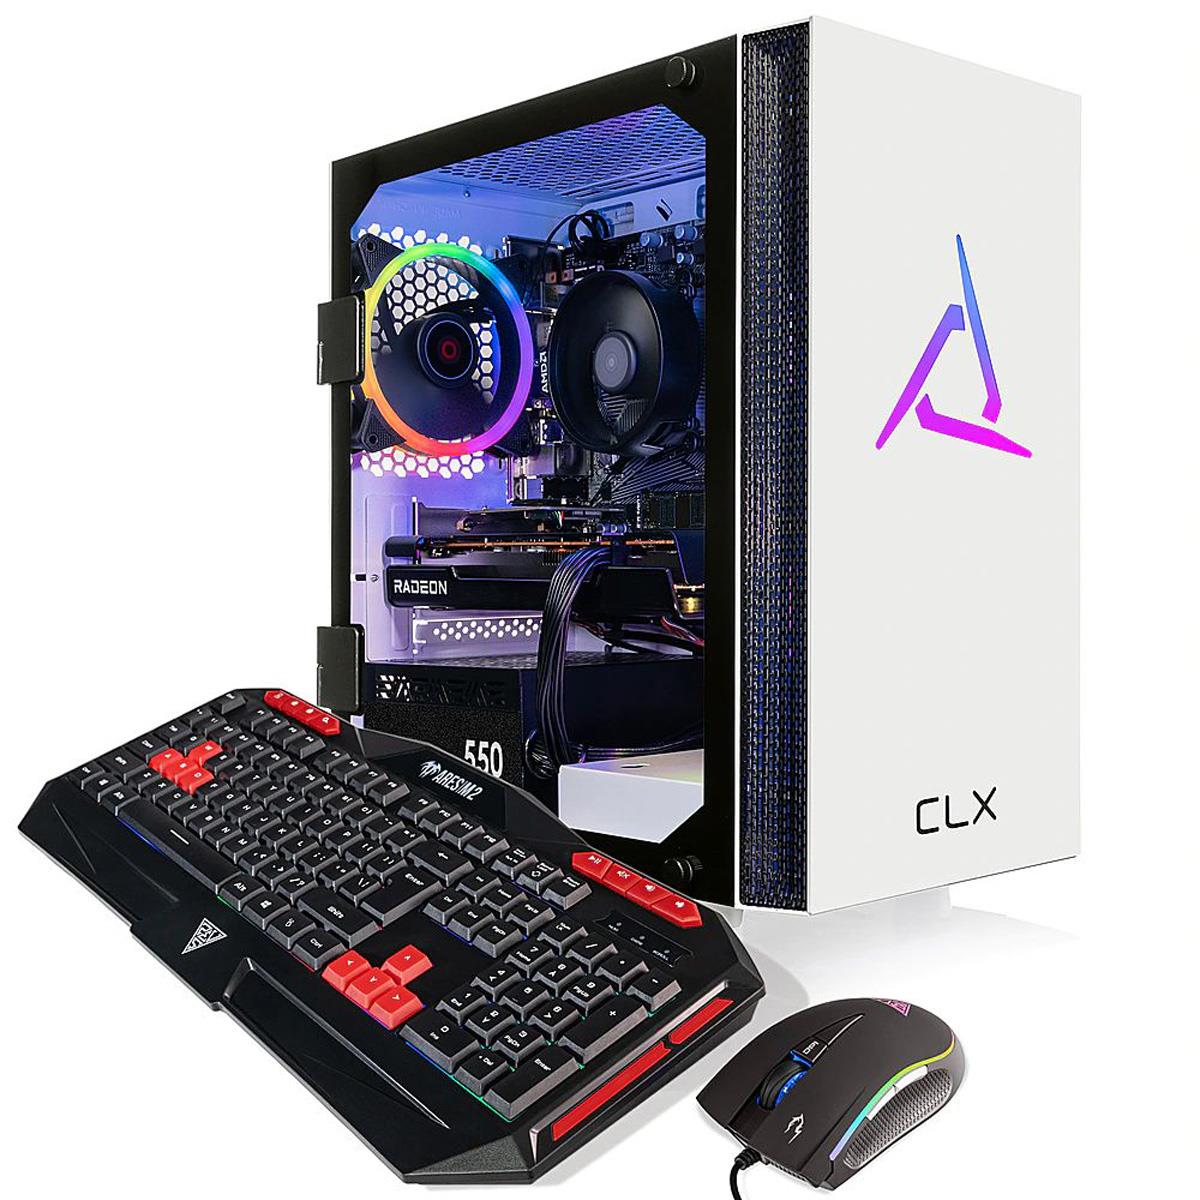 CLX SET Gaming Desktop: Picture 5